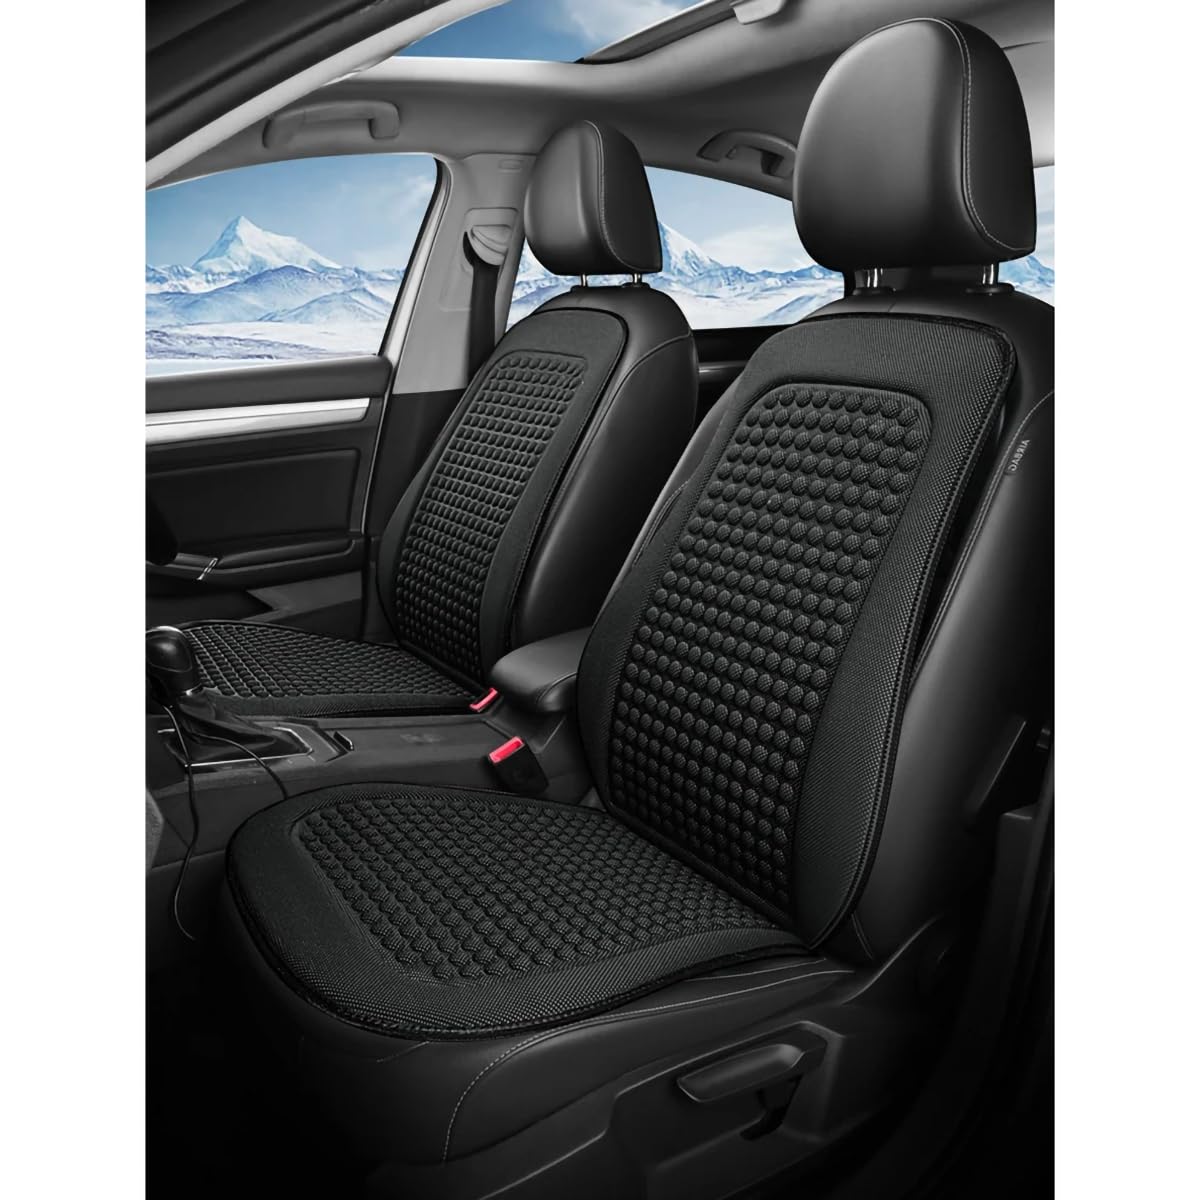 Spulhc Autositzbezug für VW Golf6 Golf 6 Mk6 5K 2009-2013, kühles Sitzkissen aus Eisseide, kühlendes/atmungsaktives Kissen,E-black-2 set von Spulhc